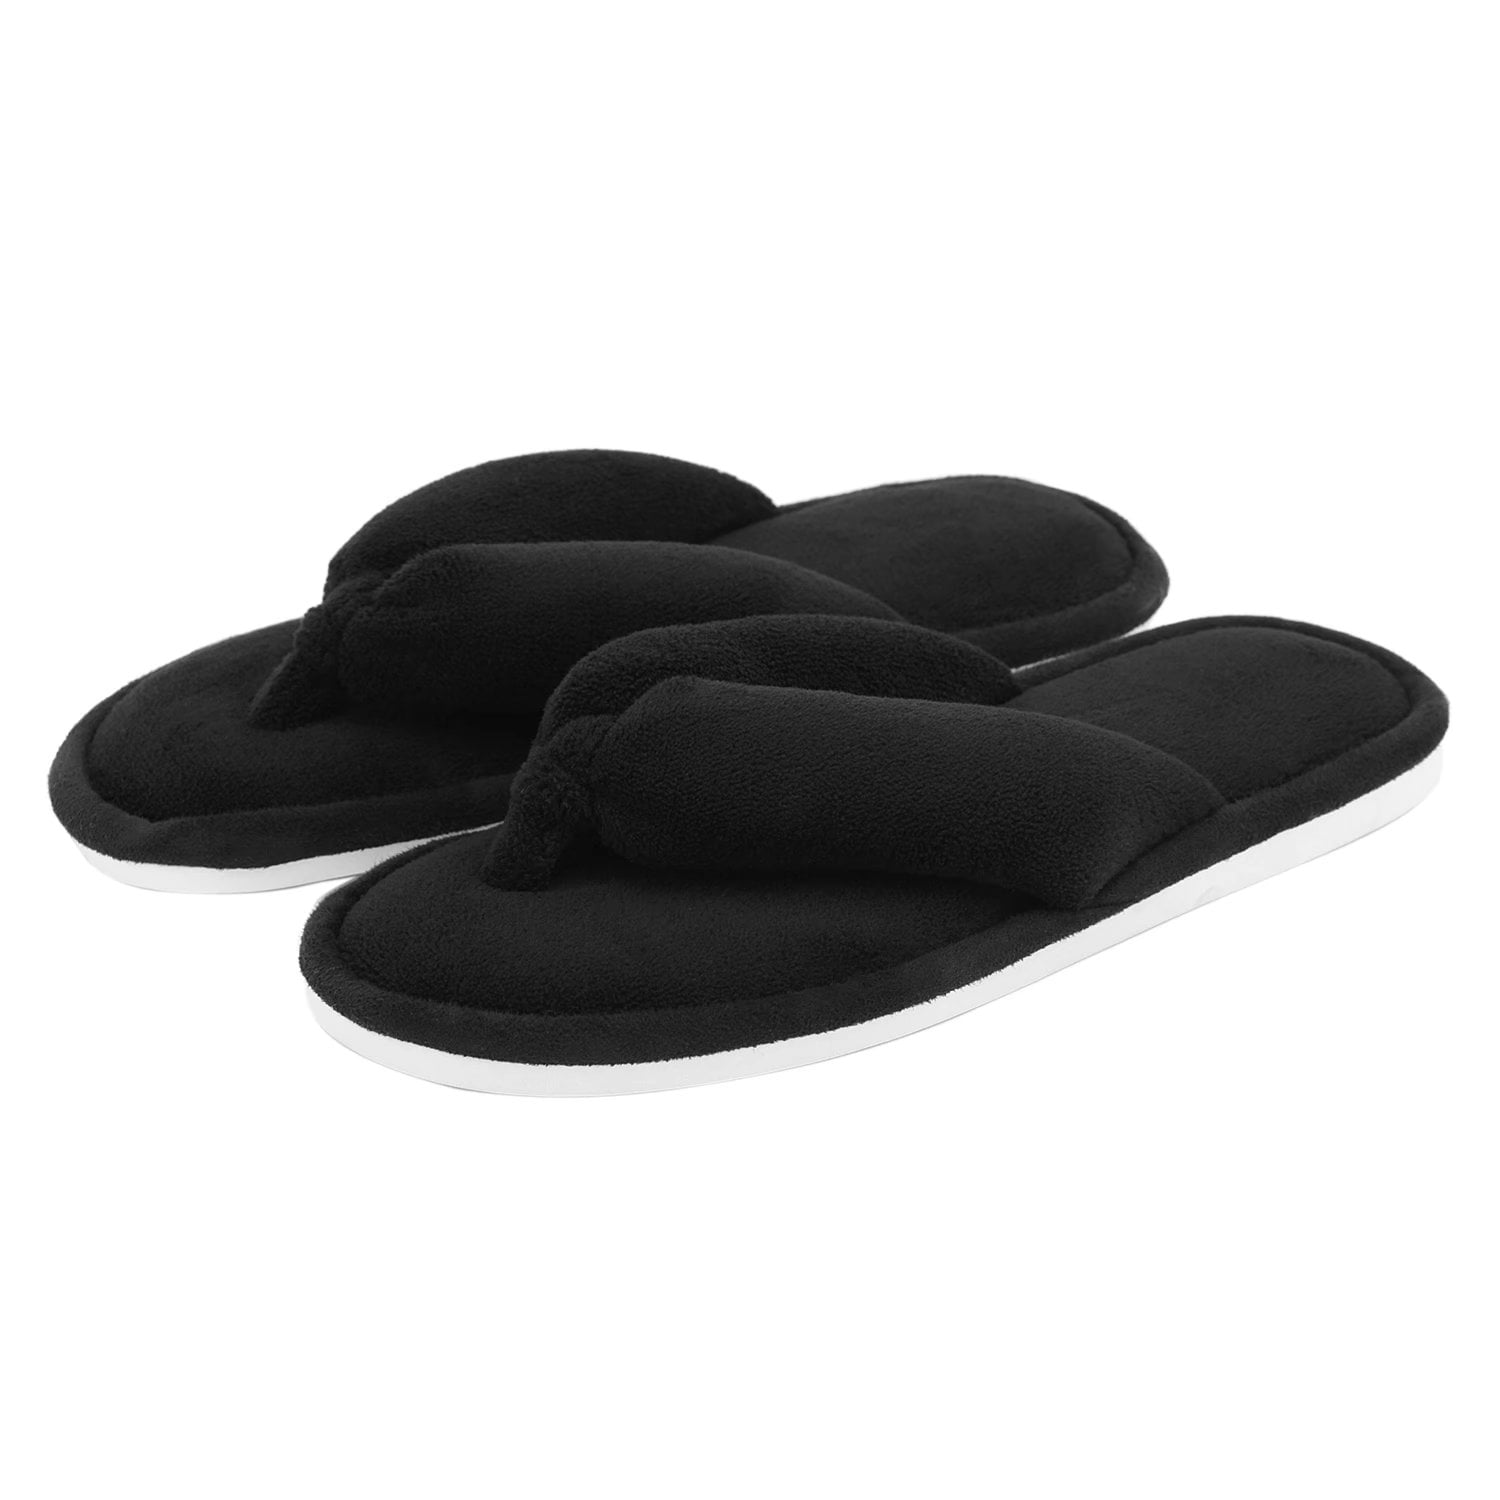 Onmygogo Coral Fleece Home Flip-Flop Slippers for Women with Non-Slip Cotton Outsole 